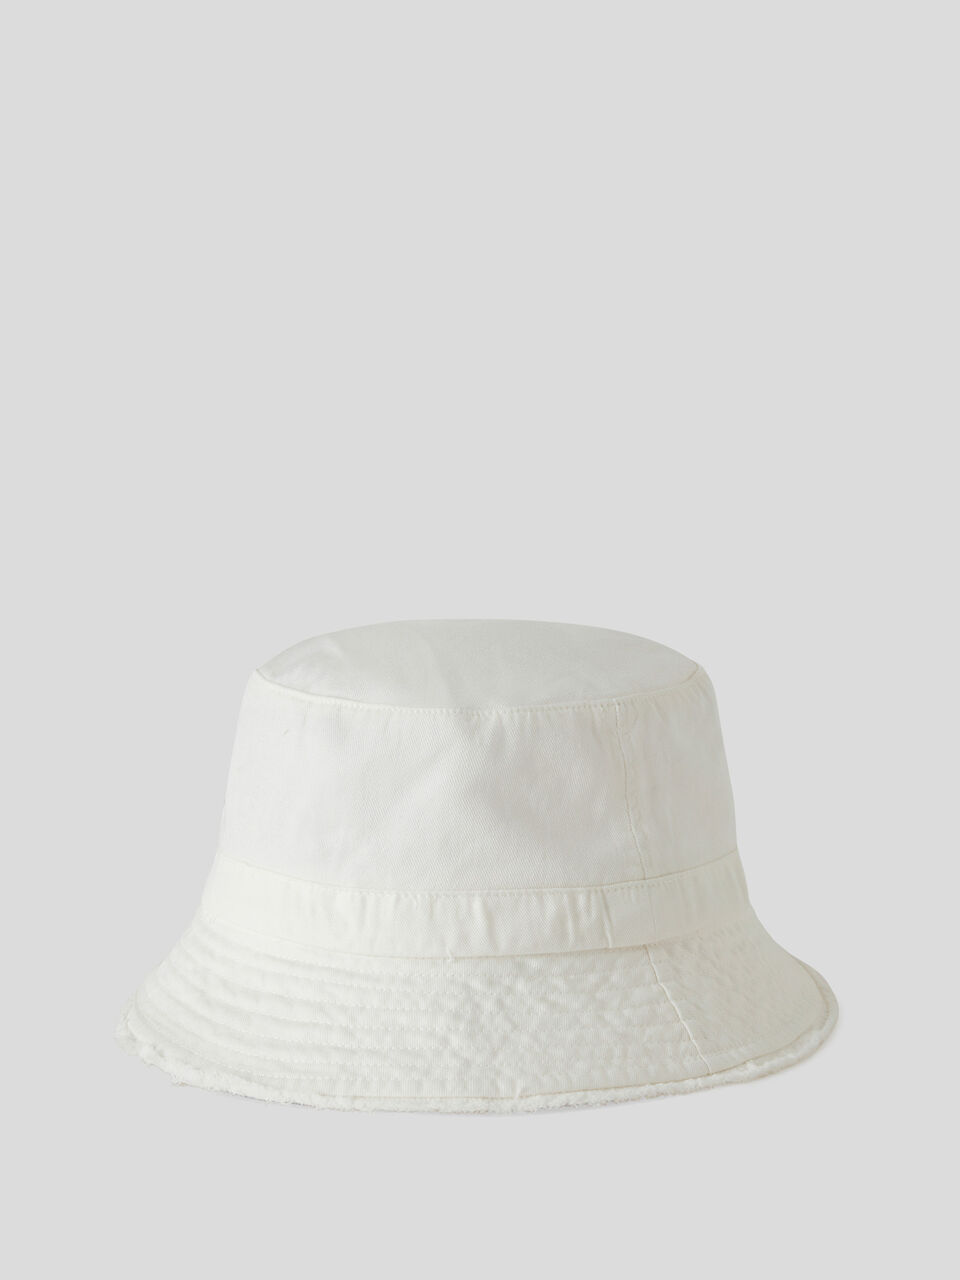 White Graphic Supreme Fisherman Bucket Hat Vintage Unisex - $40